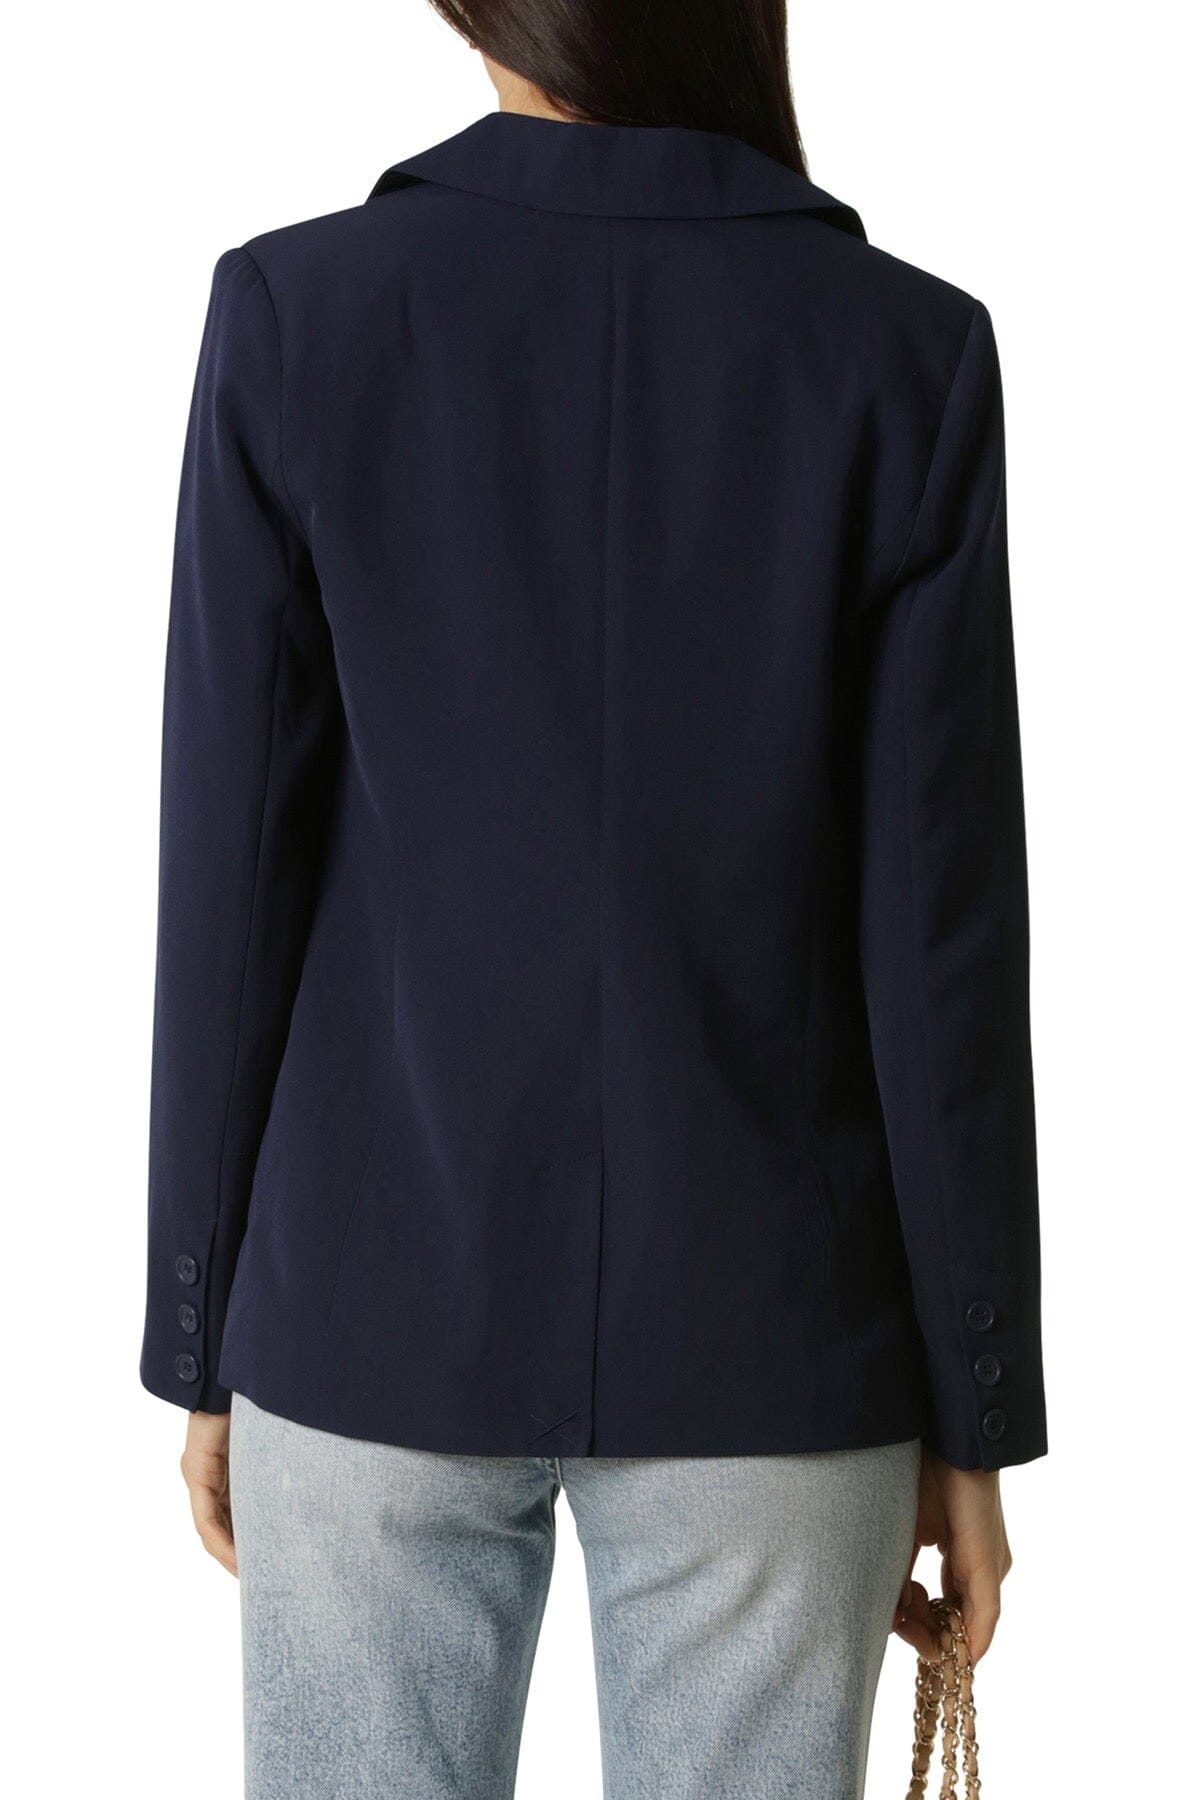 Single Button Stretch Suit Blazer Jacket Coat Navy Blue - Figure Flattering Designer Fashion Blazers Jackets for Women